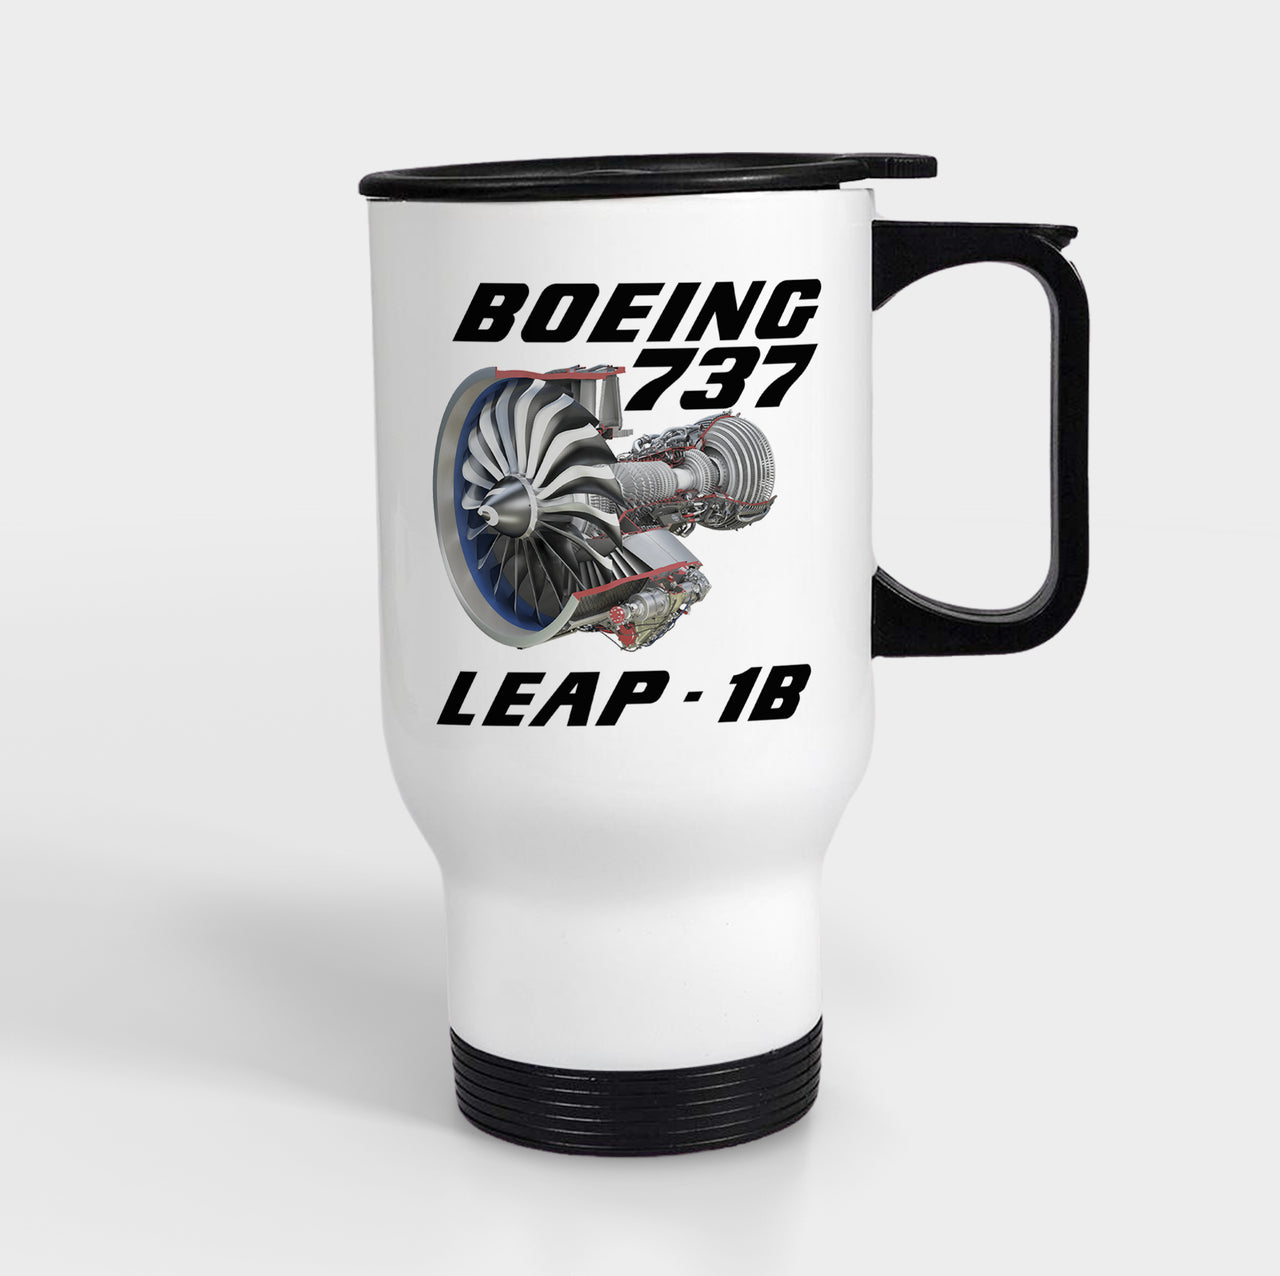 Boeing 737 & Leap 1B Engine Designed Travel Mugs (With Holder)